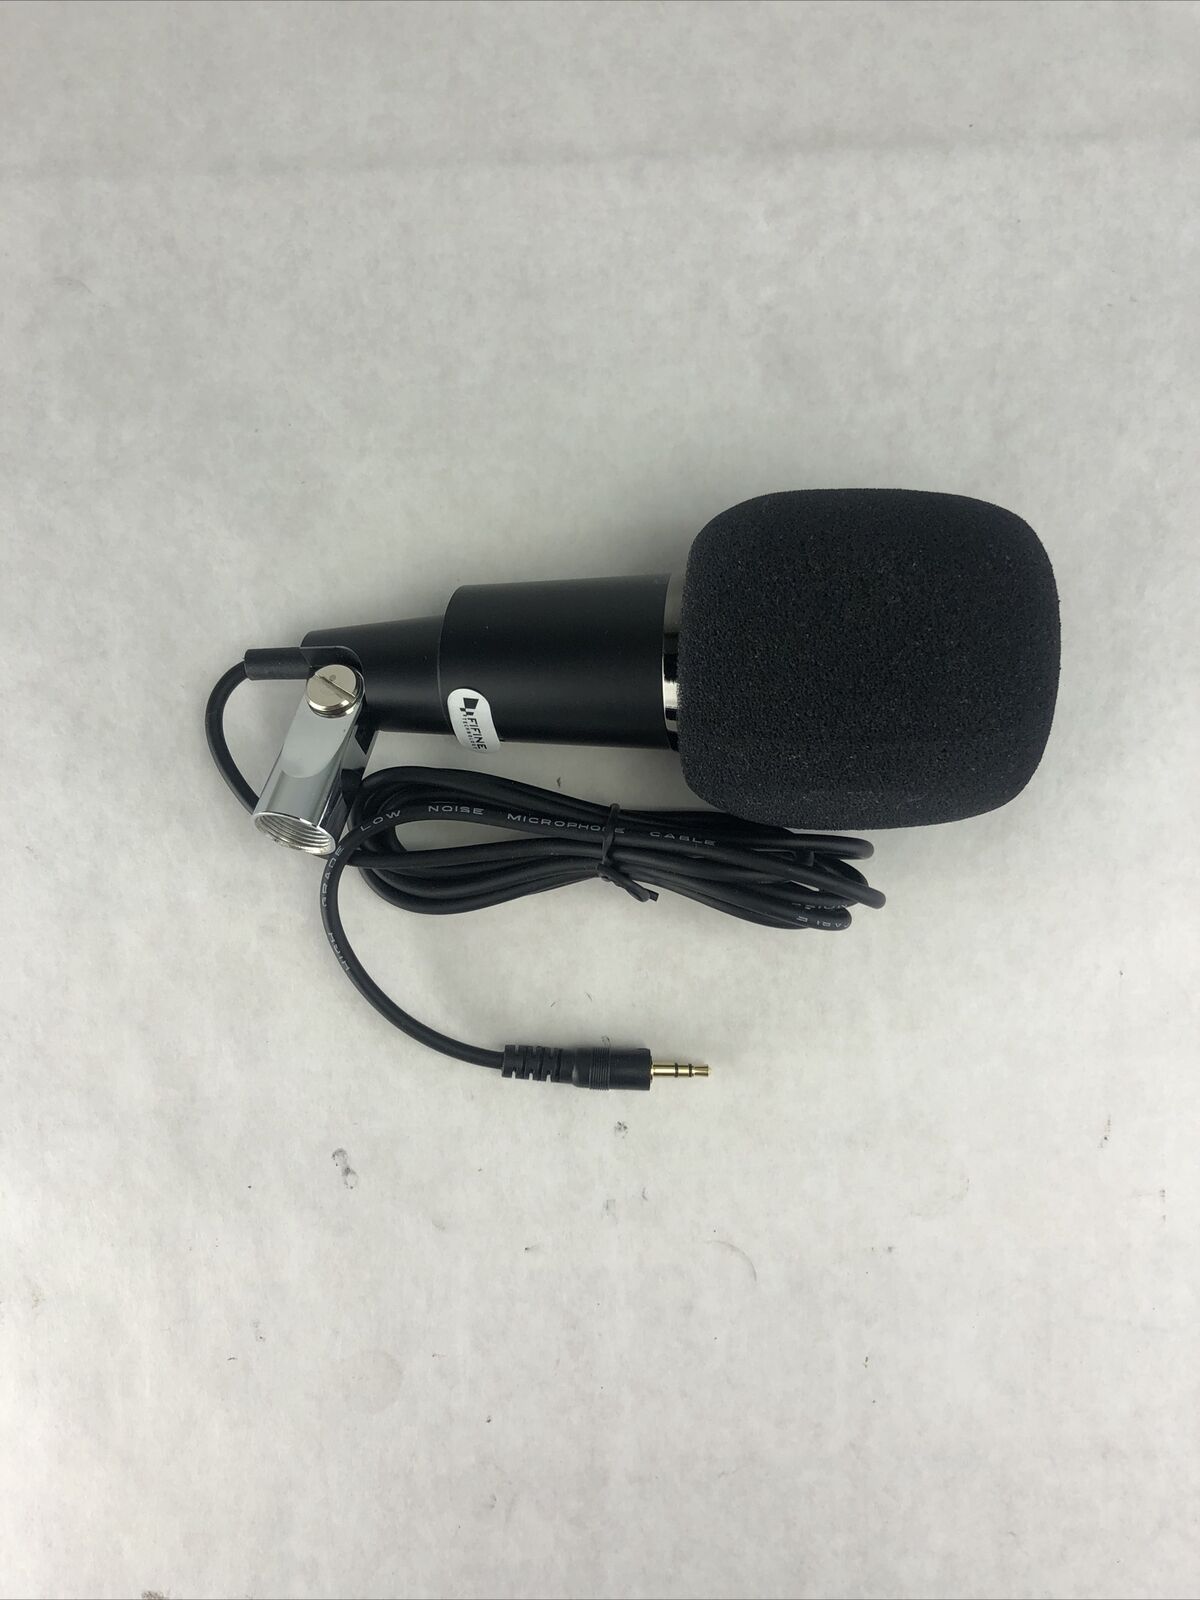 Fifine Condenser Microphone 3.5mm Plug Games-K667